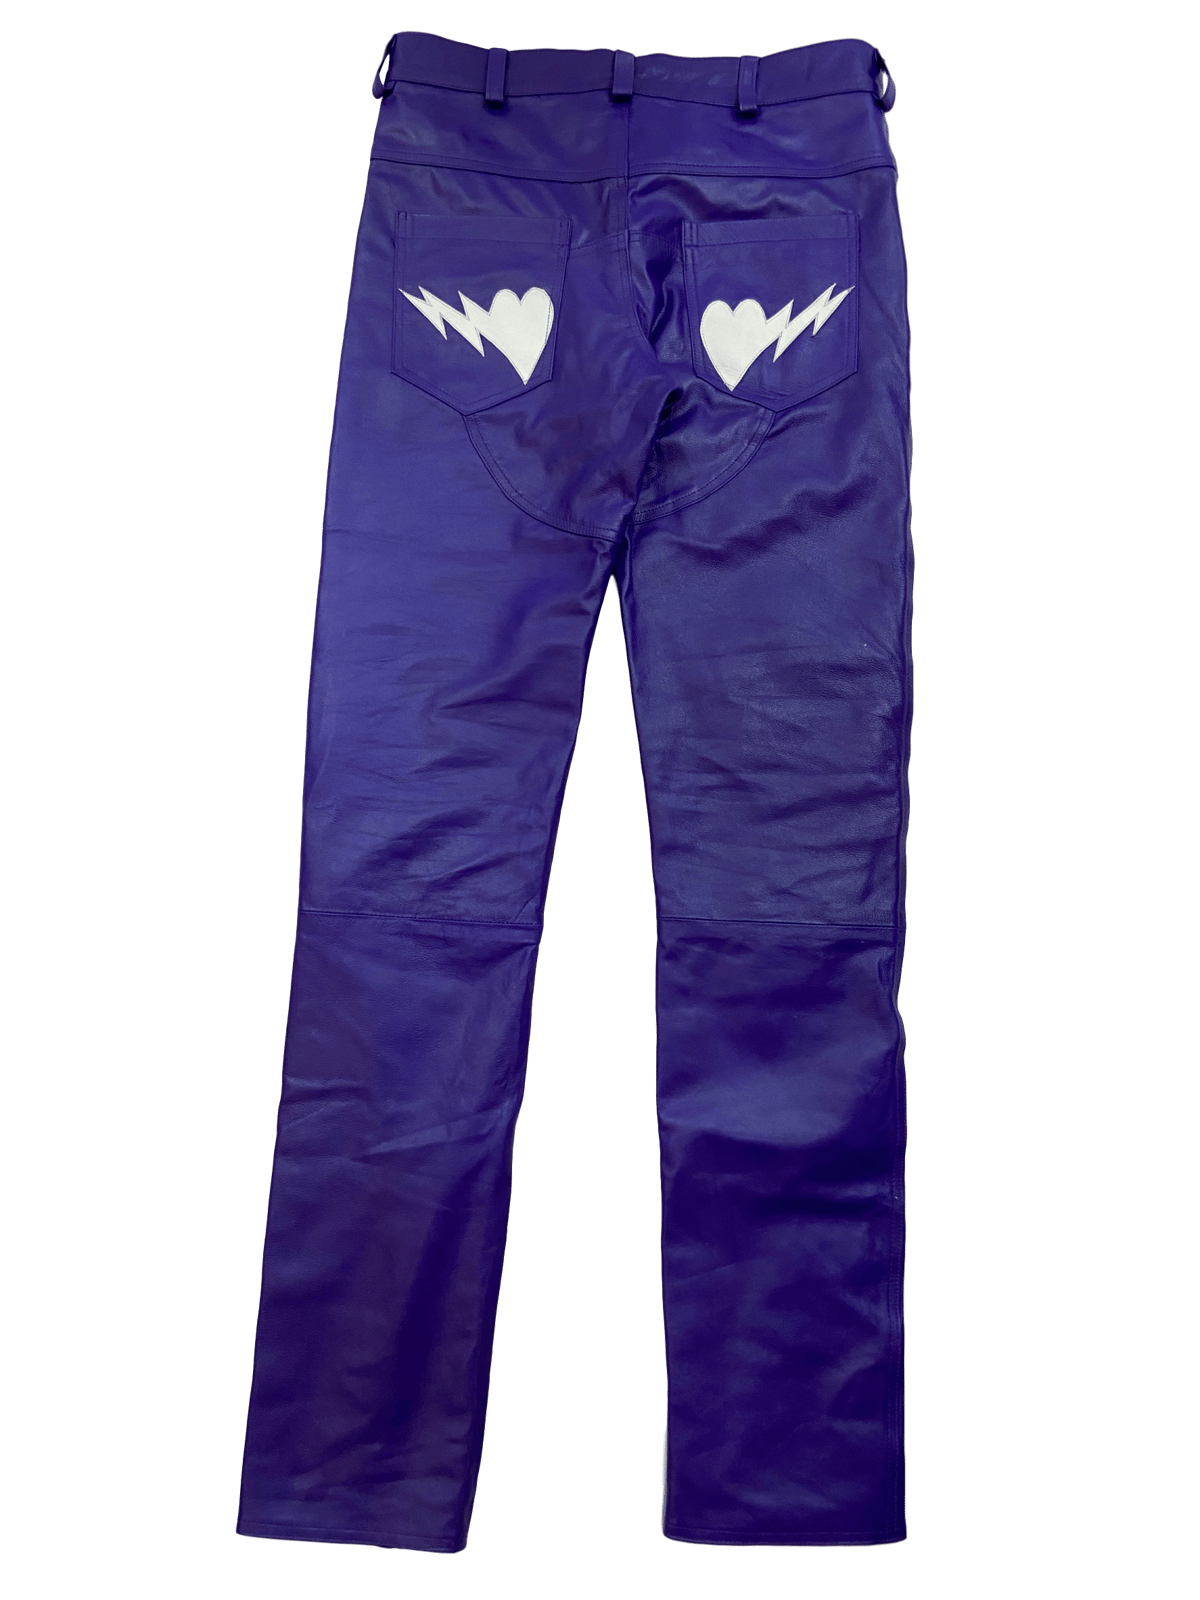 purple leather jeans